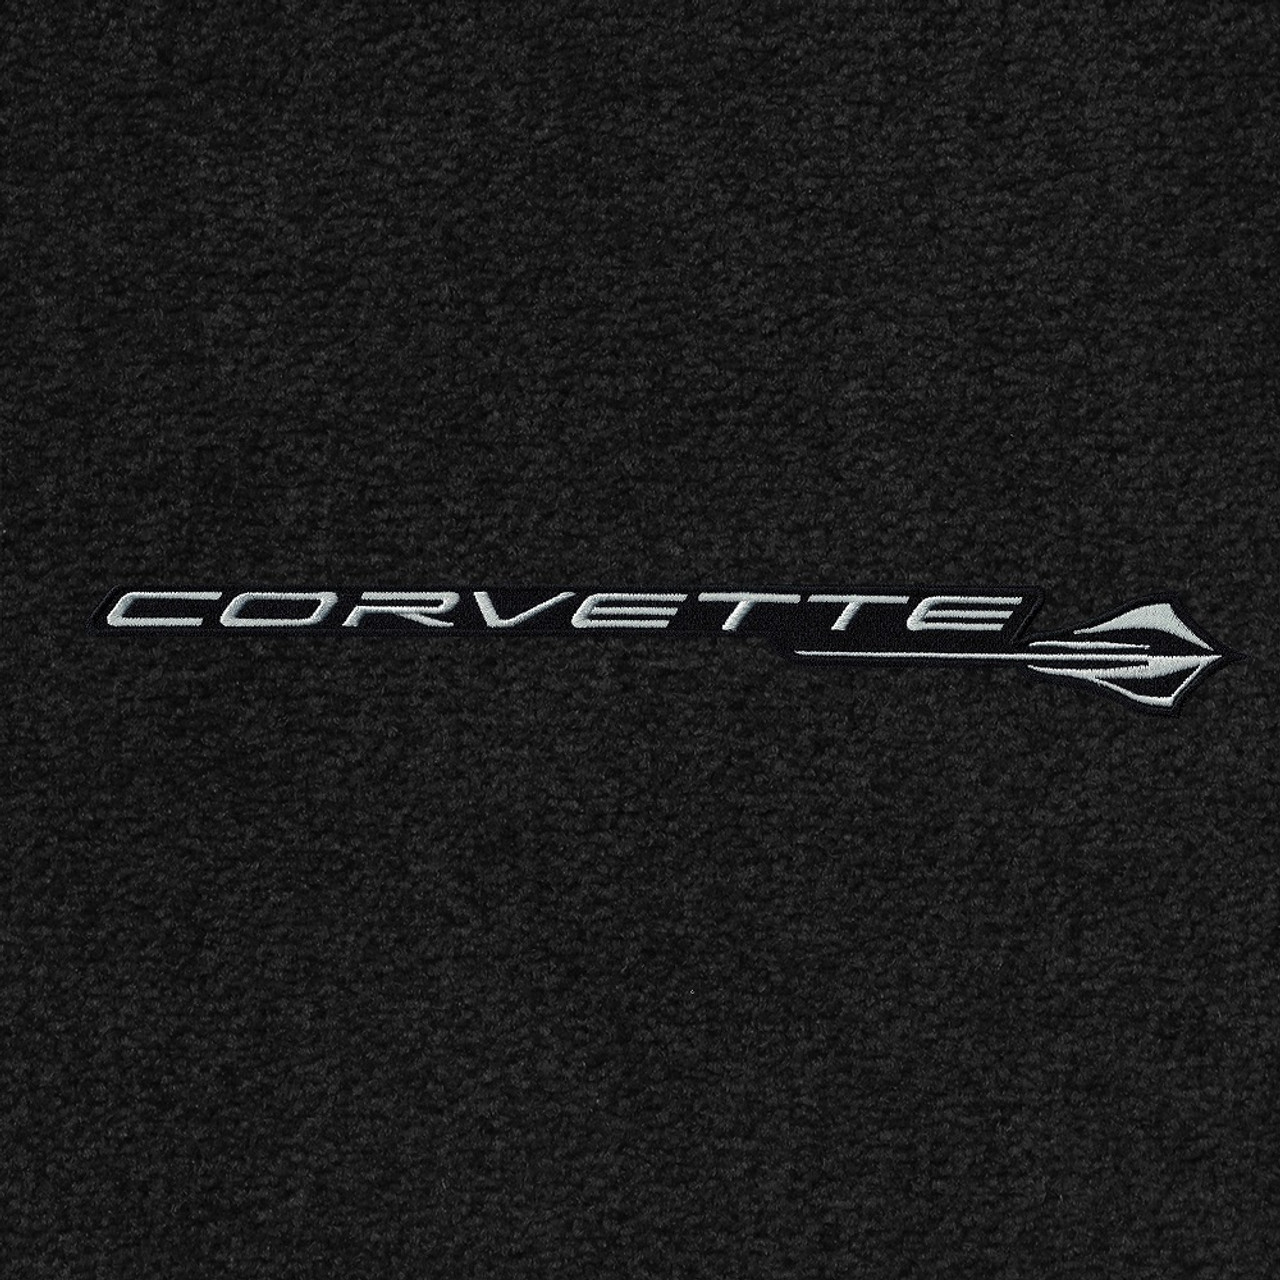 819410 - C8 Stingray Logo and Corvette Word Combo